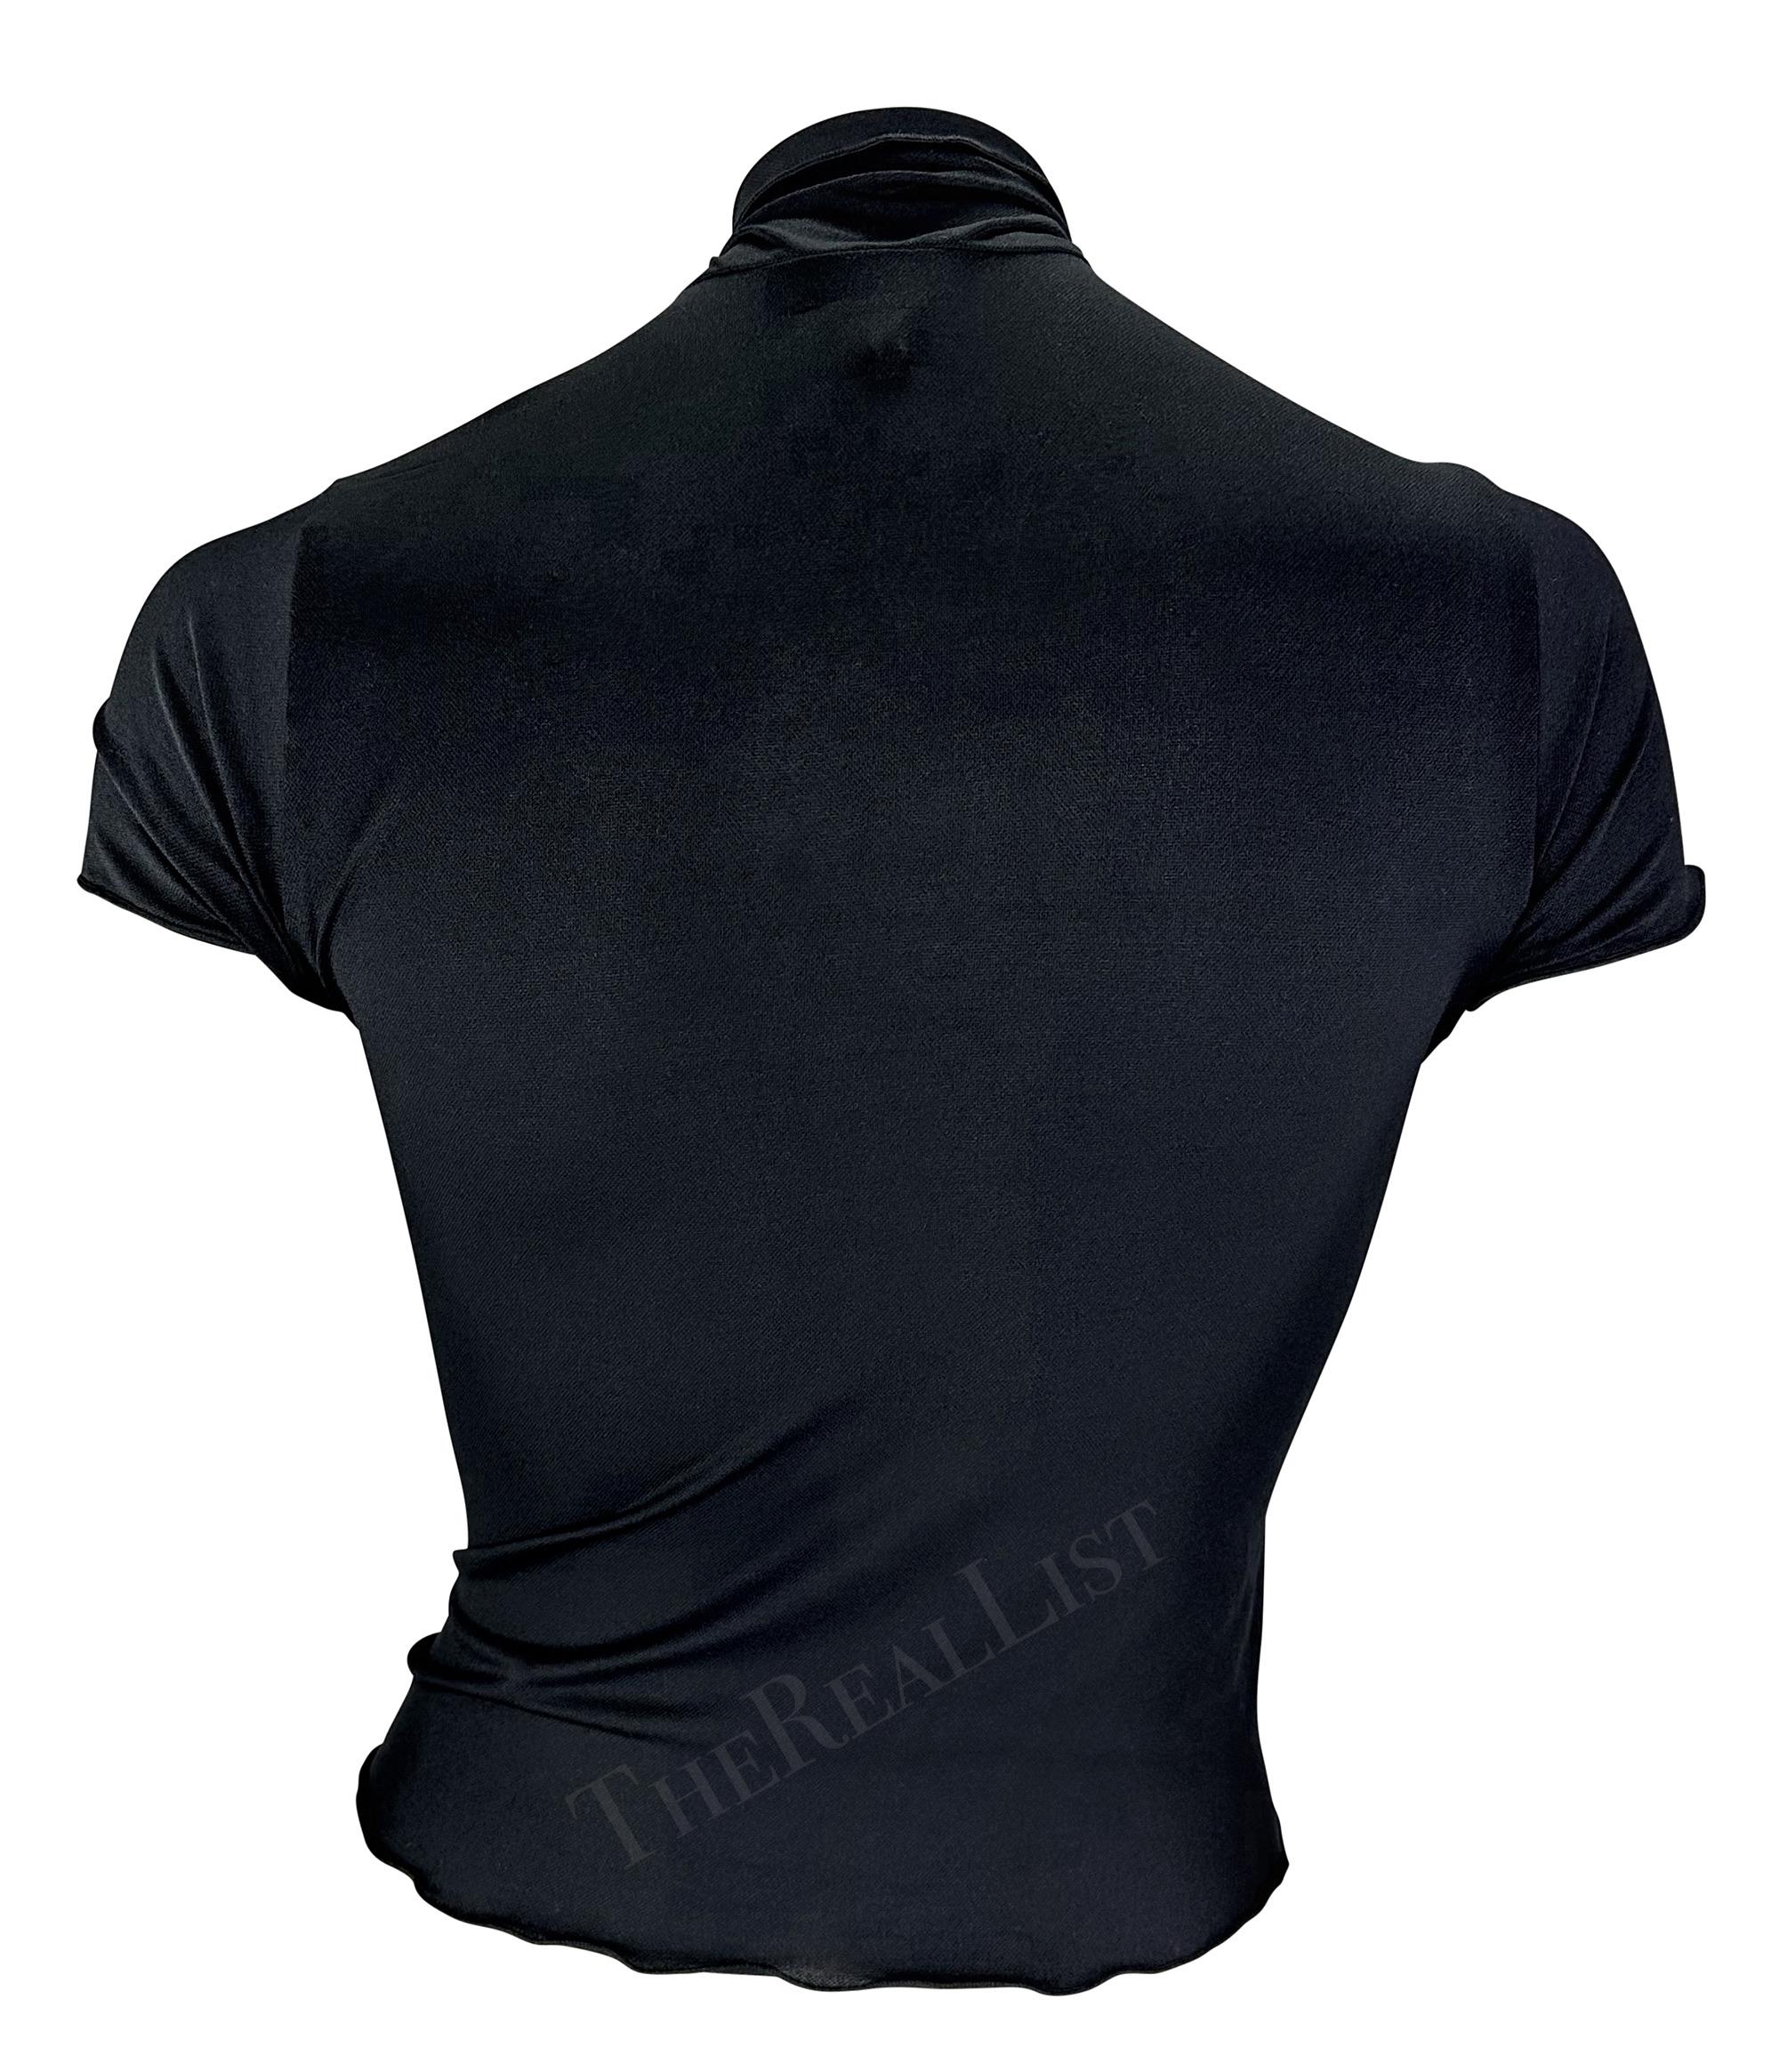 S/S 2001 Anna Sui Tie Front Stretch Bodycon Cutout Black T-Shirt 2